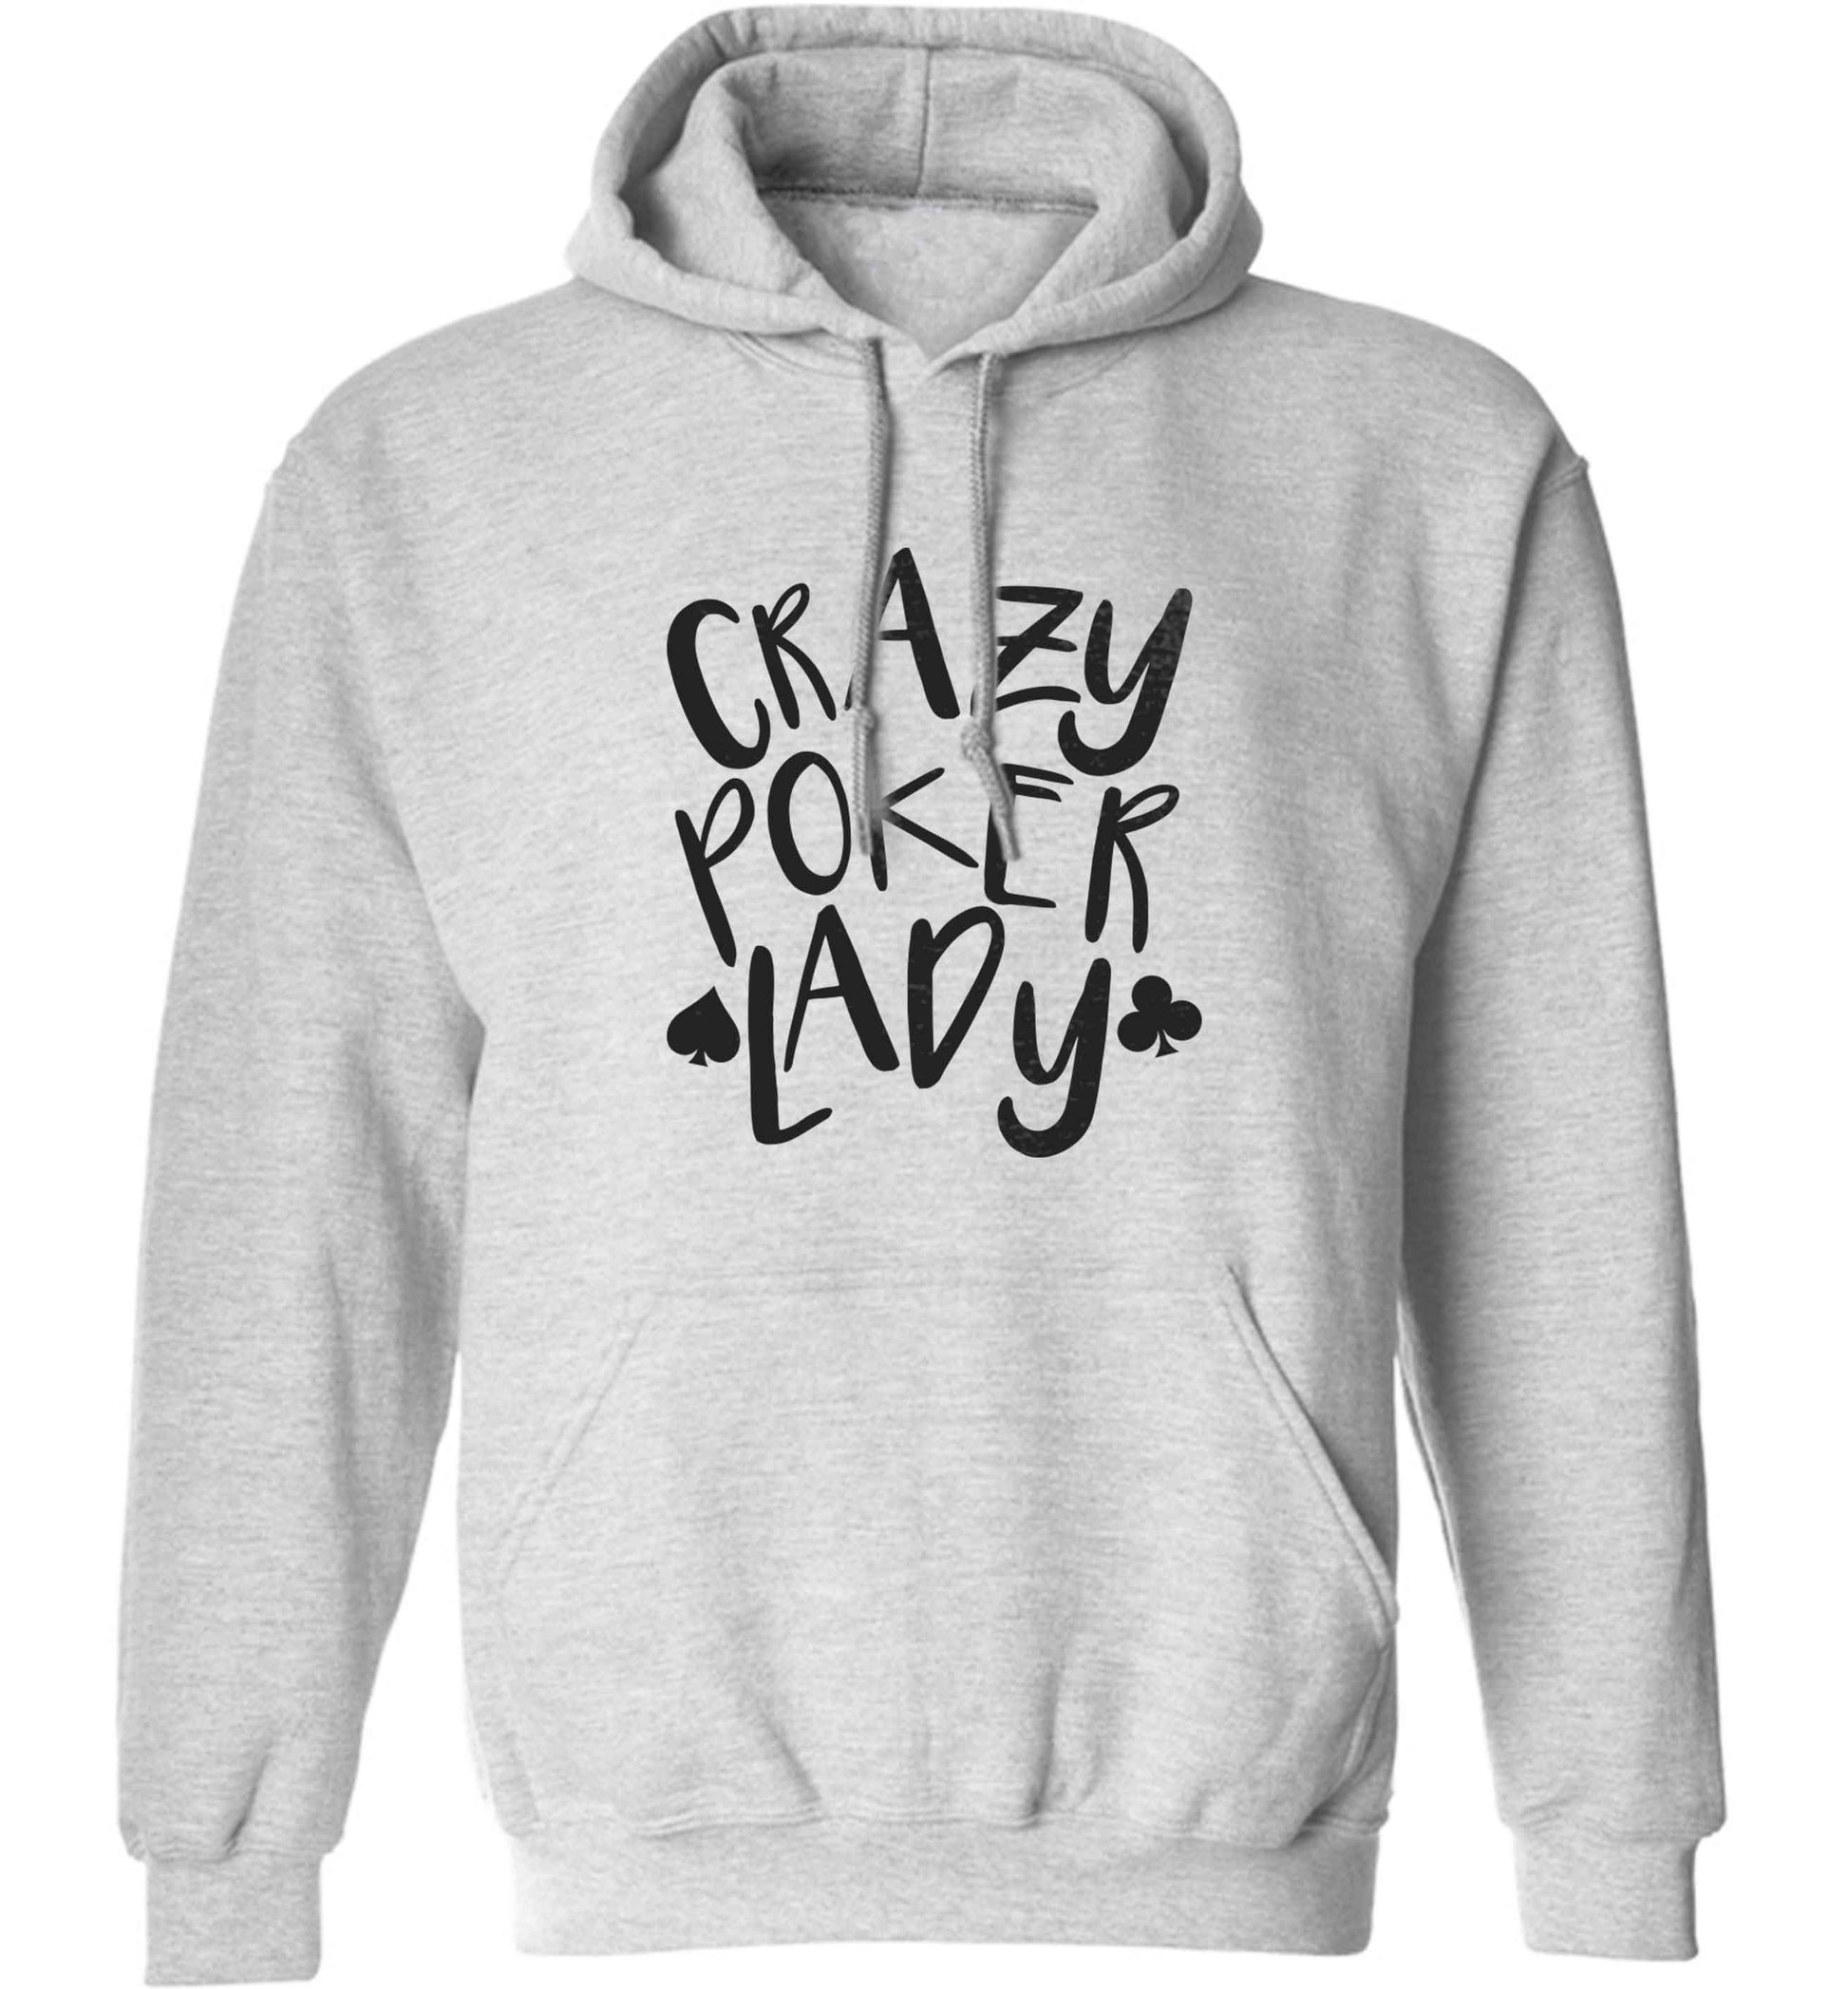 Crazy poker lady adults unisex grey hoodie 2XL